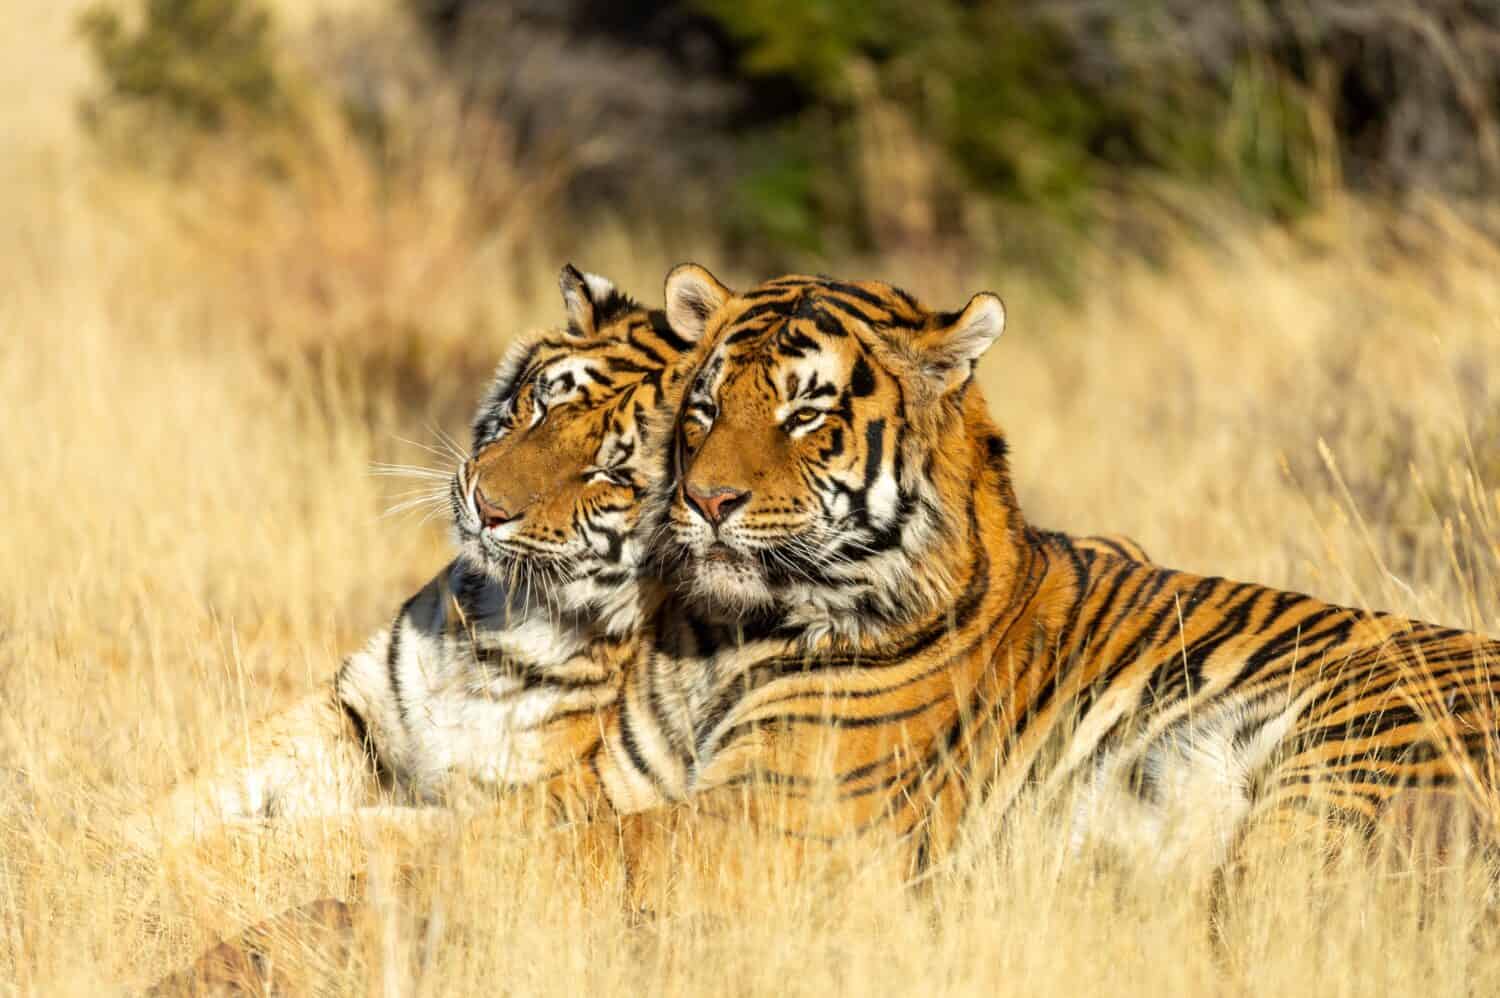 tigress caresses the tiger male